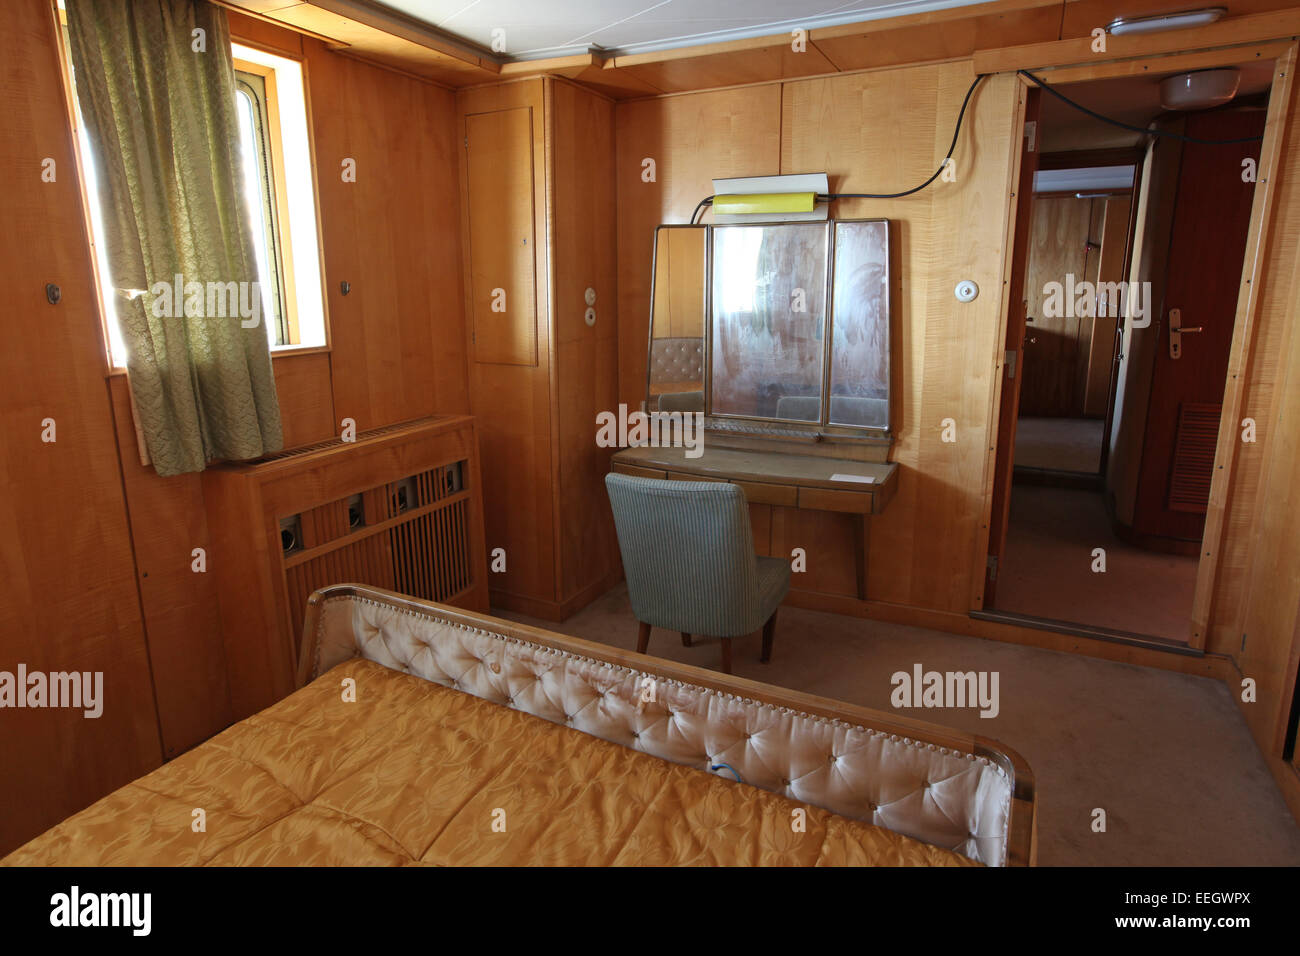 Jovanka Broz sleeping room interior on board of Tito presidential yacht Galeb moored  in the harbor of Rijeka, Croatia. Stock Photo